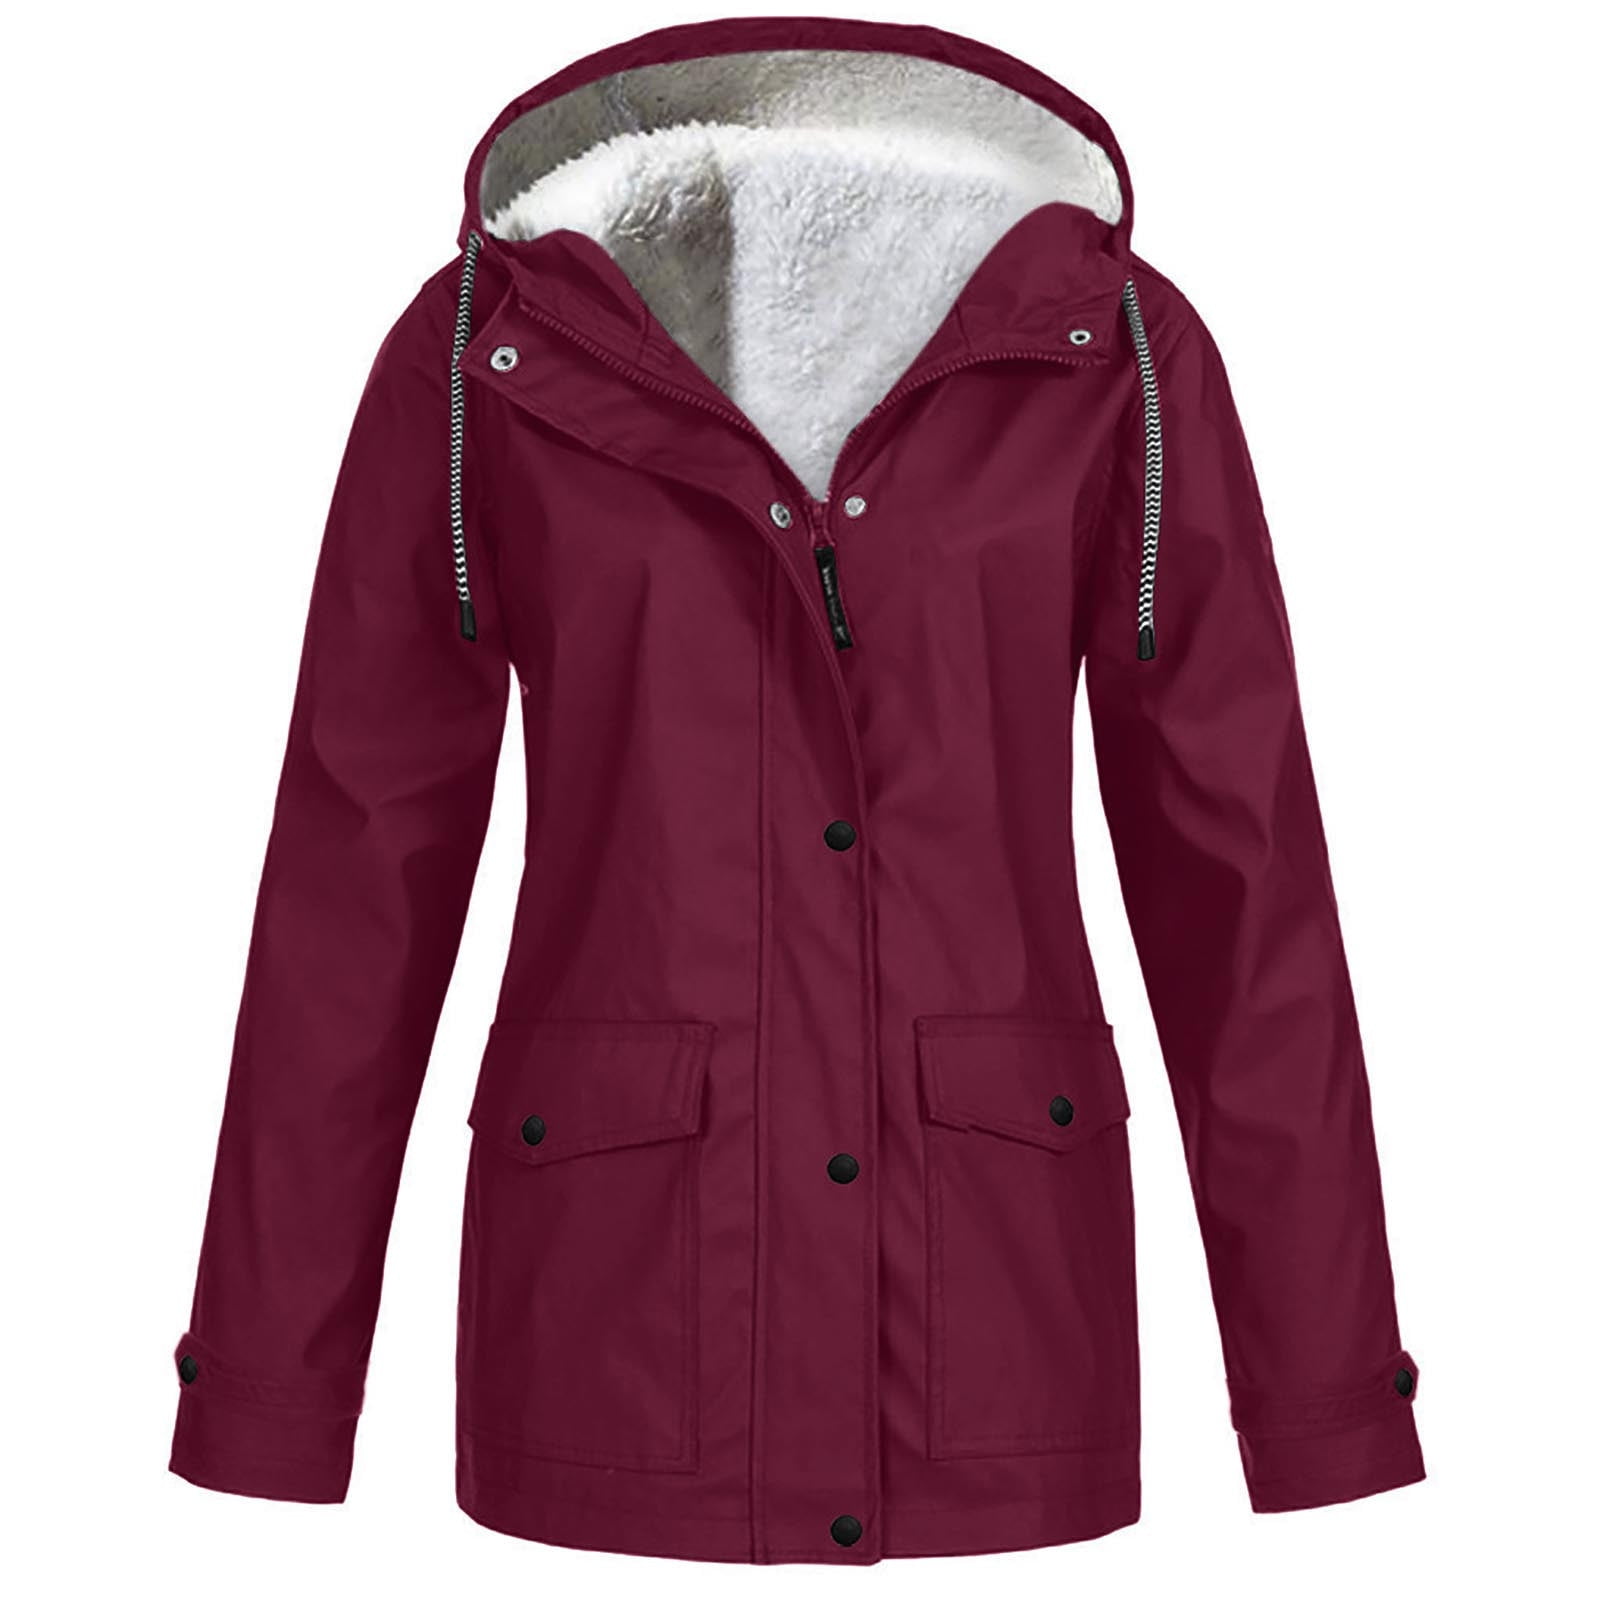 Teissuly Women’s Solid Rain Jacket Outdoor Jackets Hooded Raincoat ...